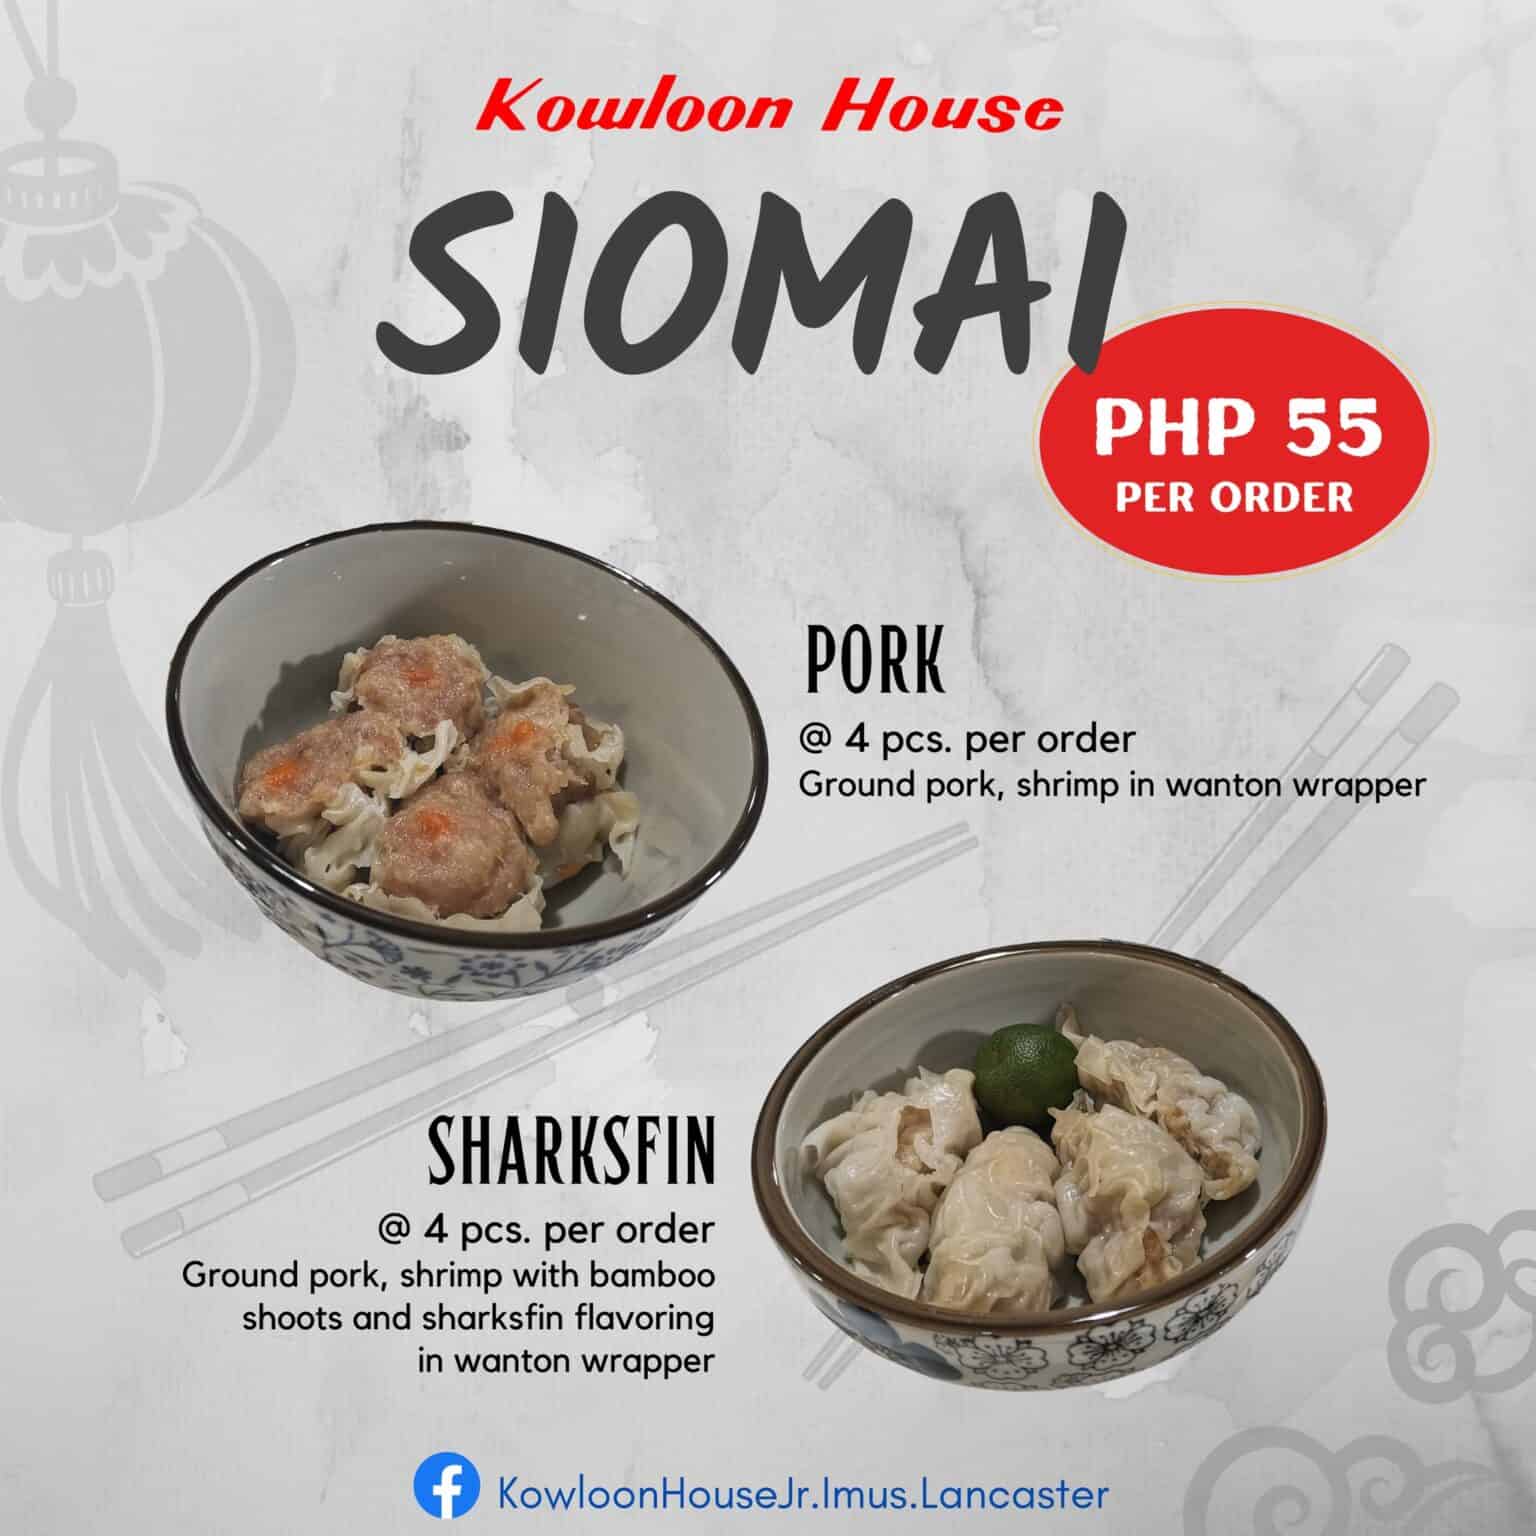 Shrimp Siomai Kowloon House Menu 1536x1536 